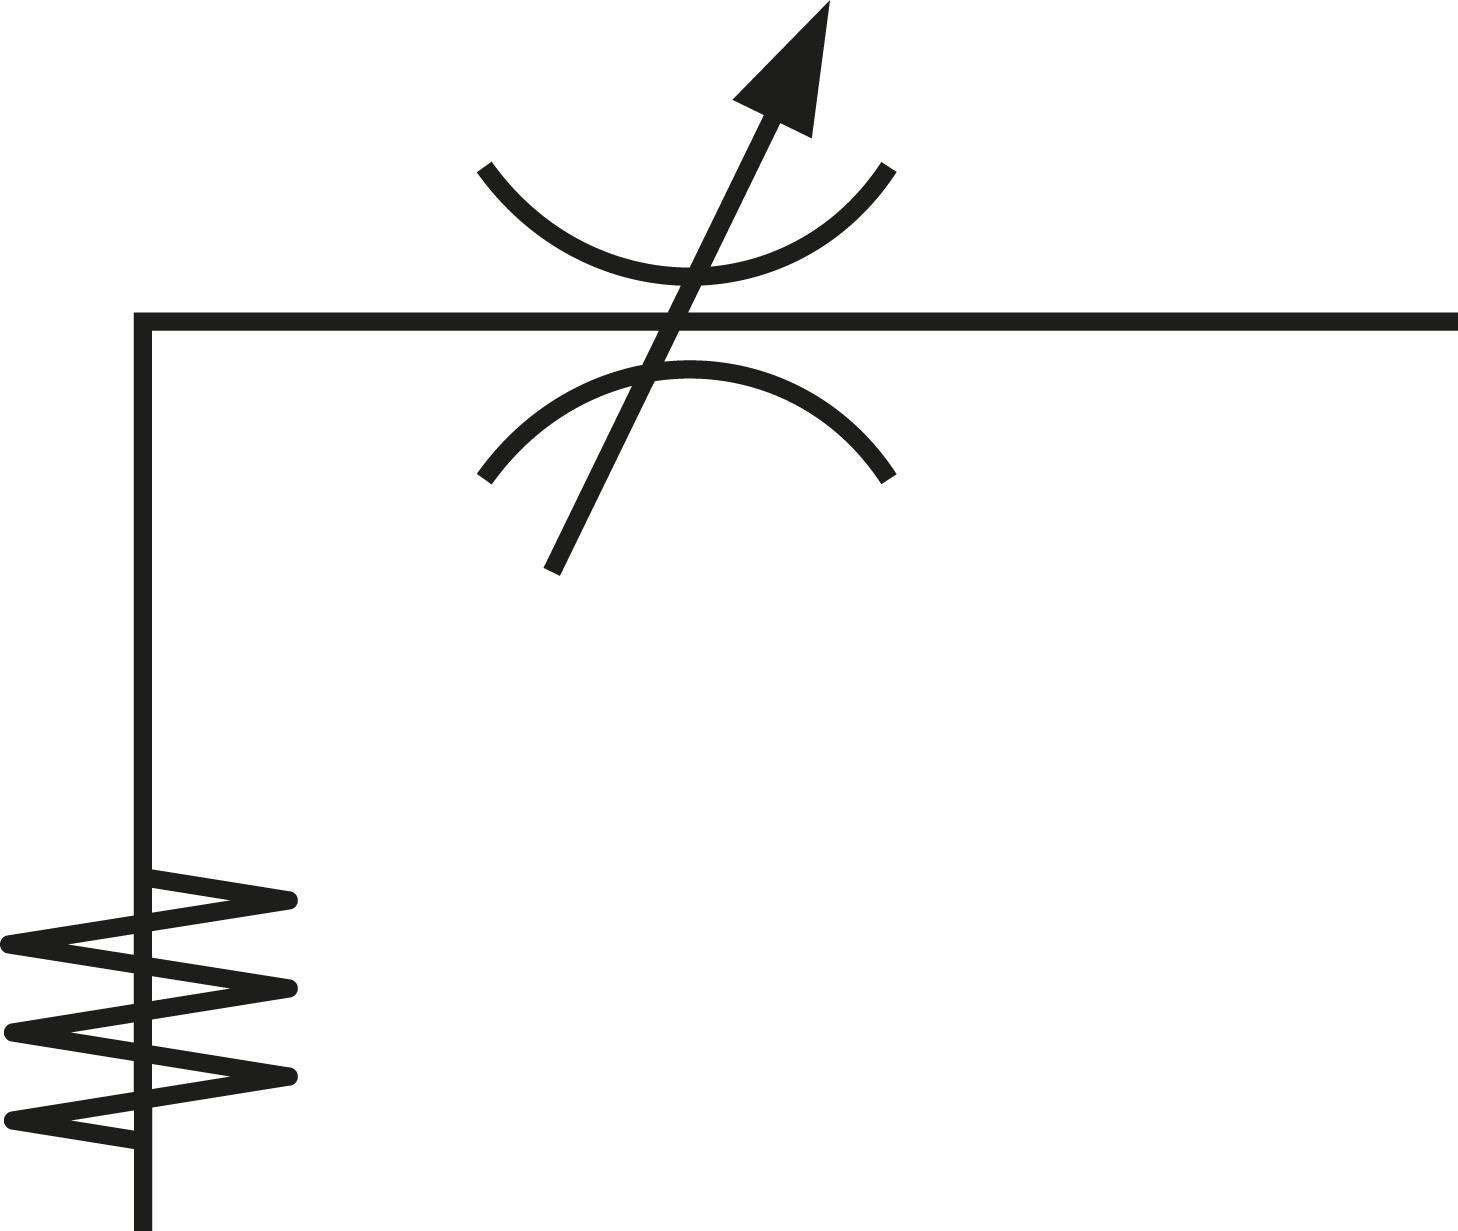 Schematic symbol: Intake / exhaust air flow control